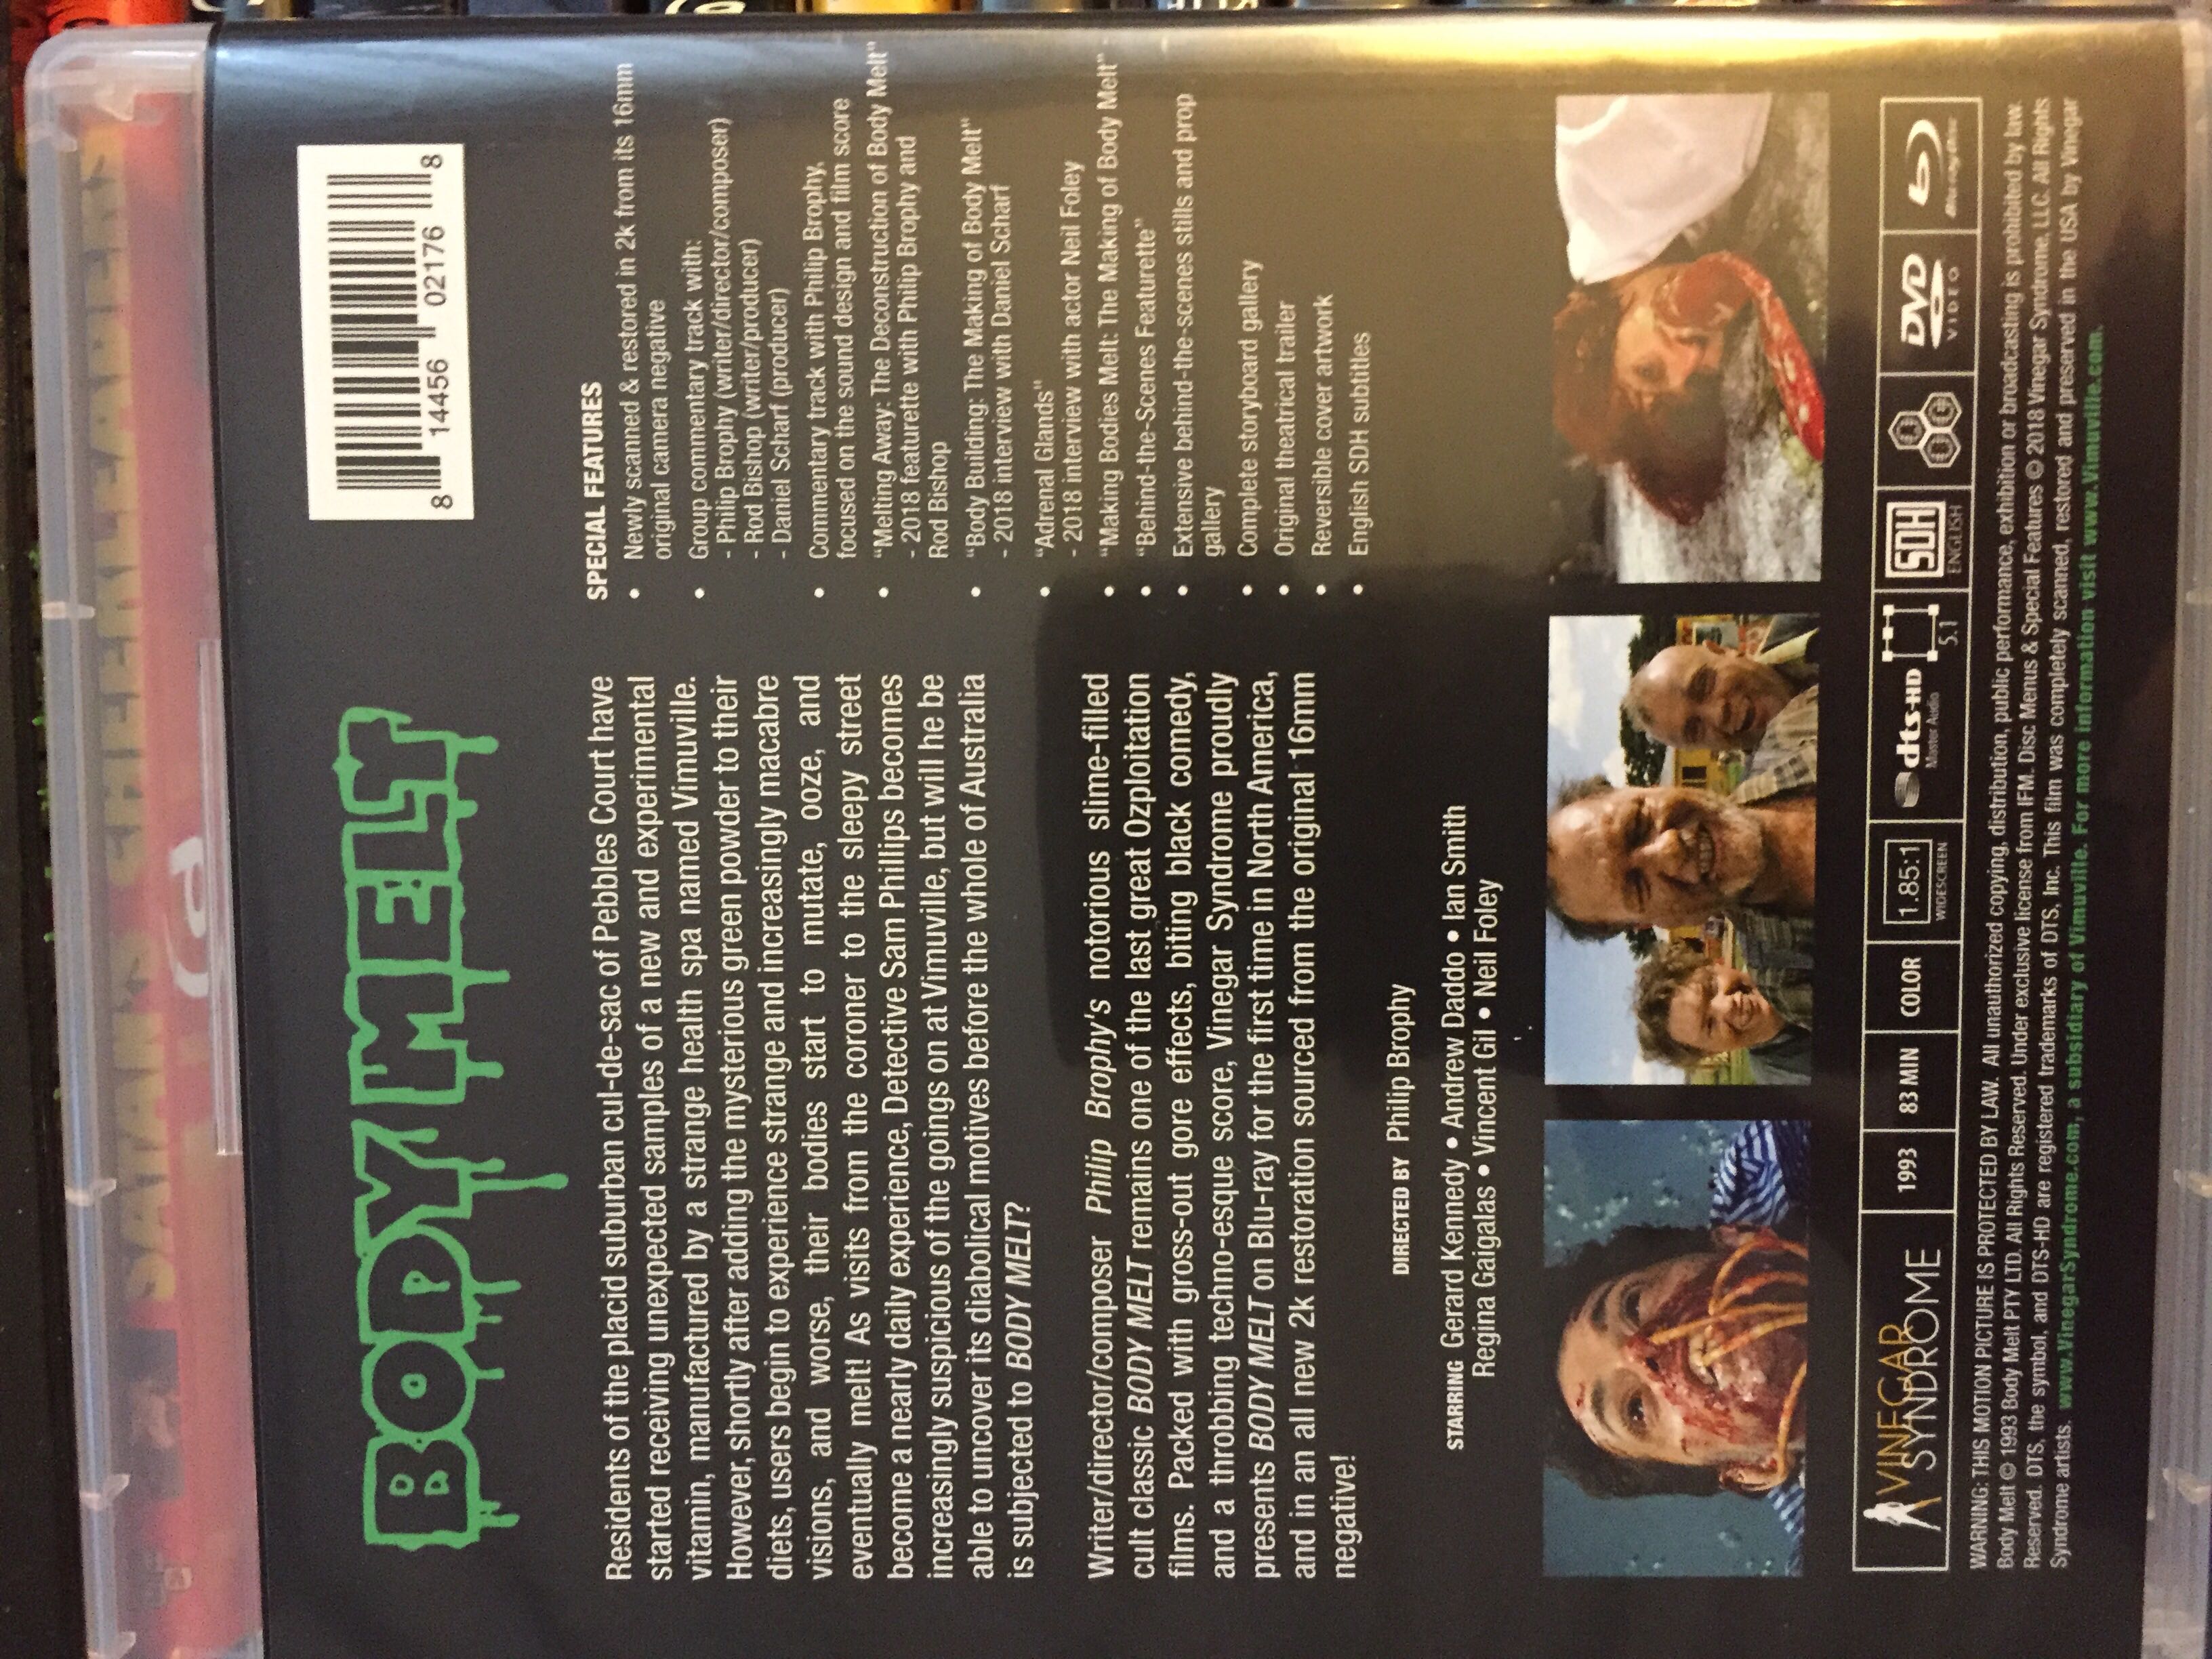 Body Melt Blu-ray movie collectible [Barcode 814456021768] - Main Image 3